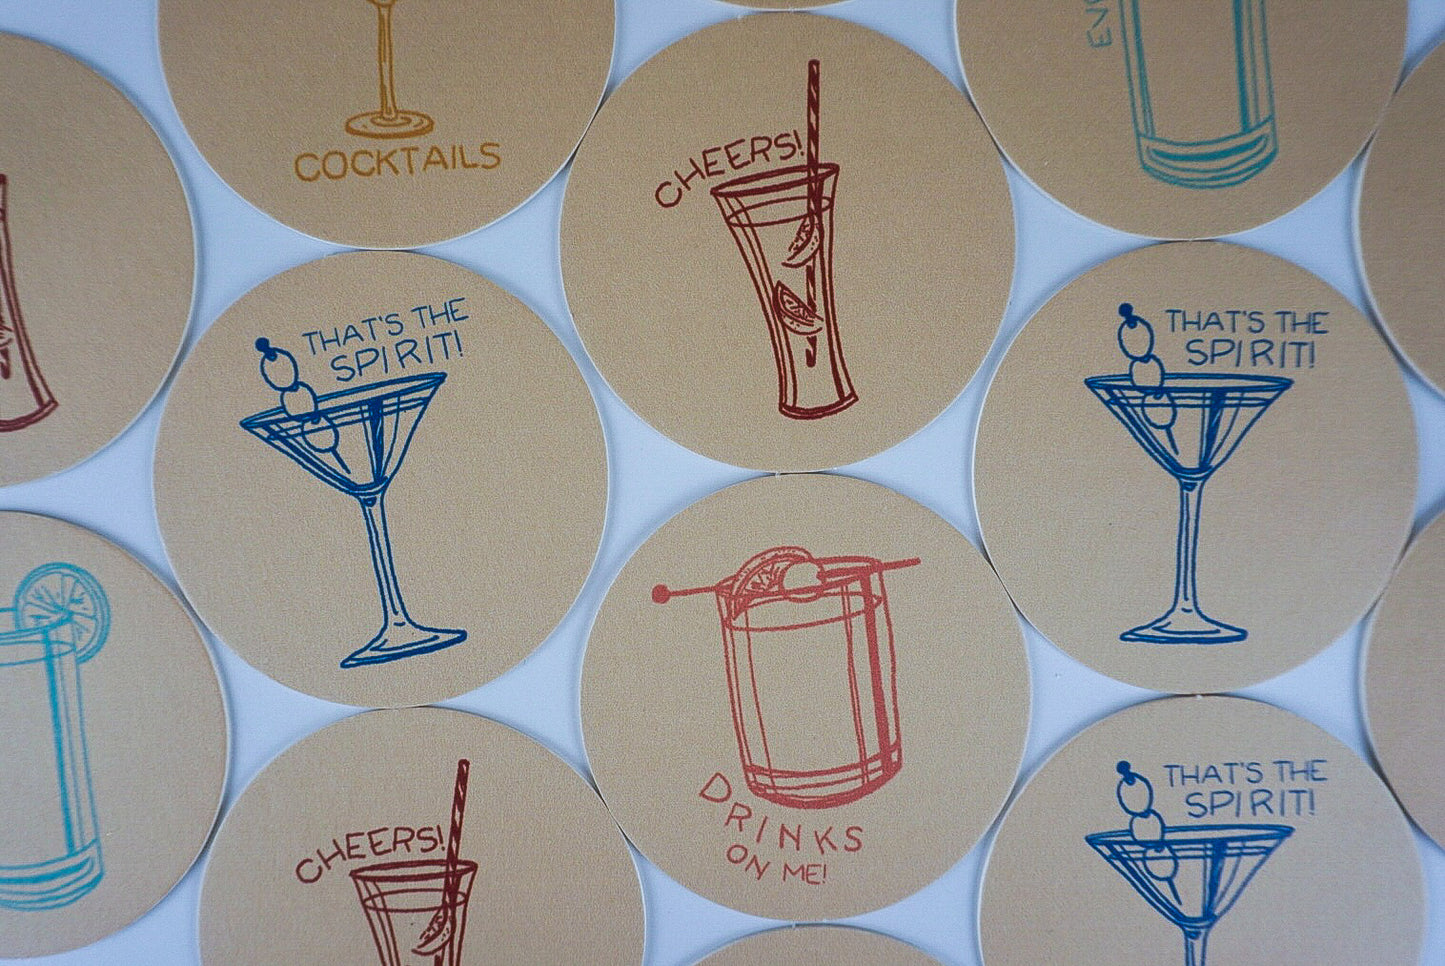 Cocktail Coaster Set of 5